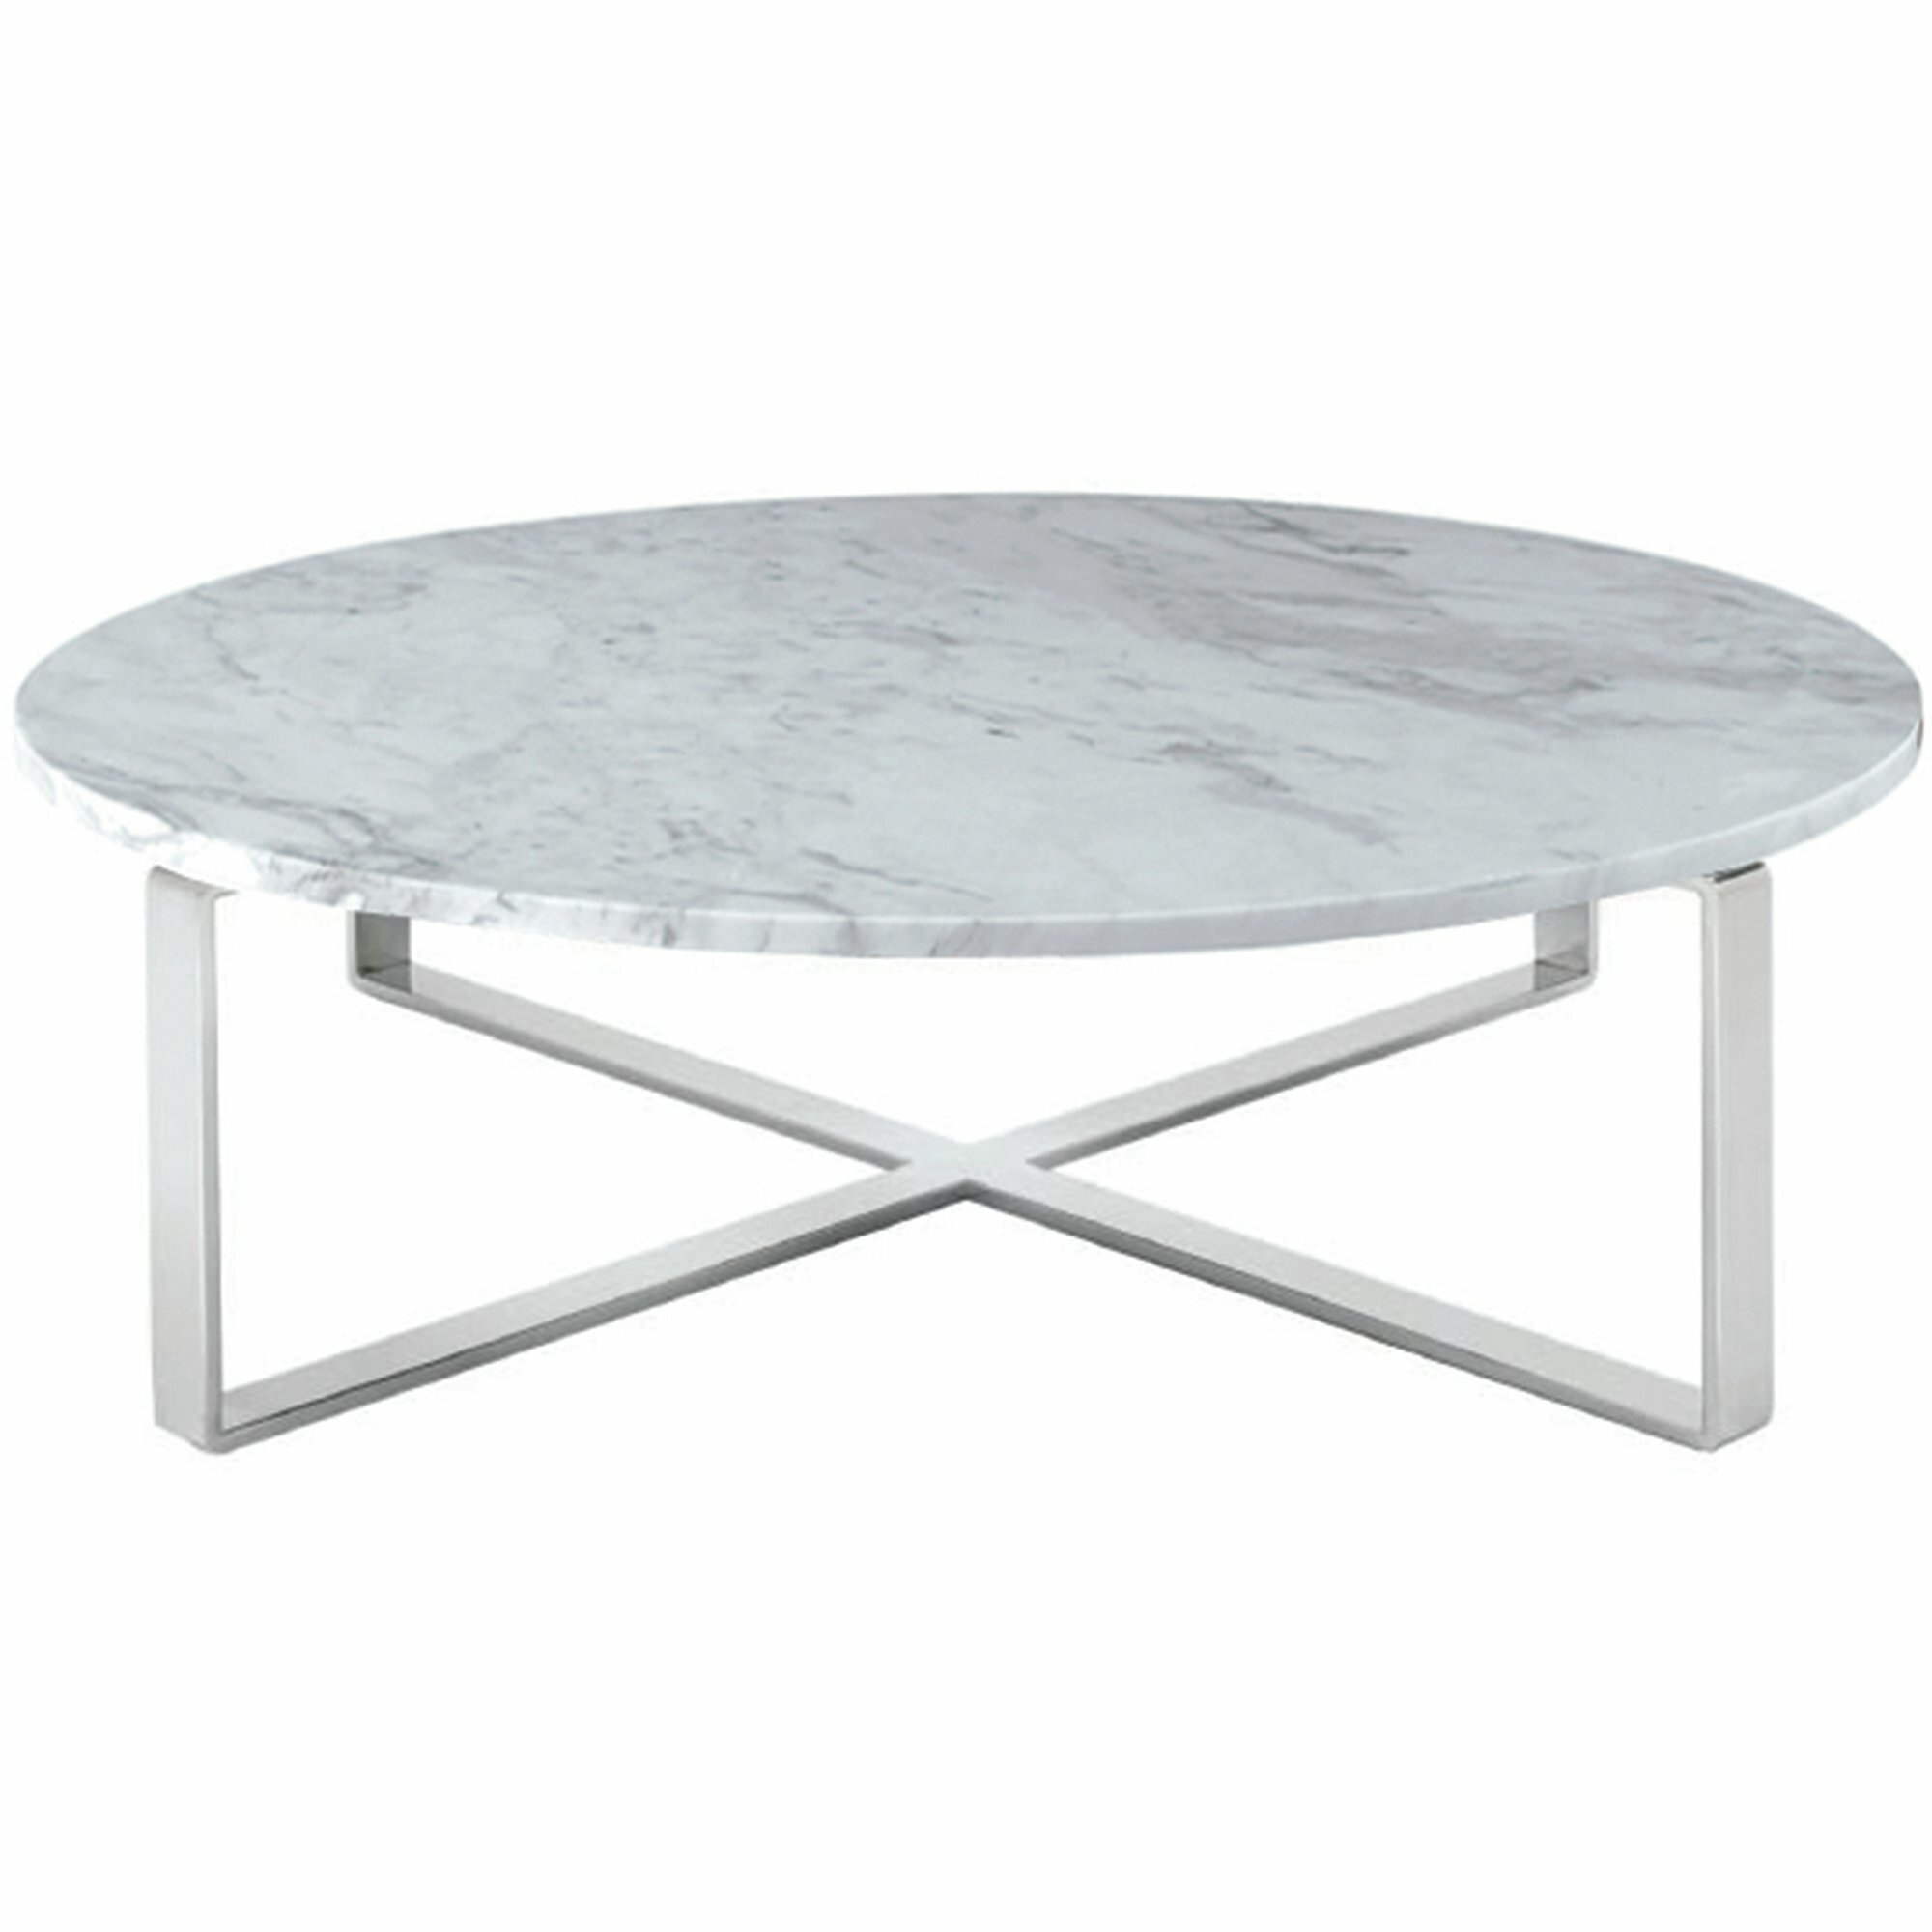 Granite coffee table tops